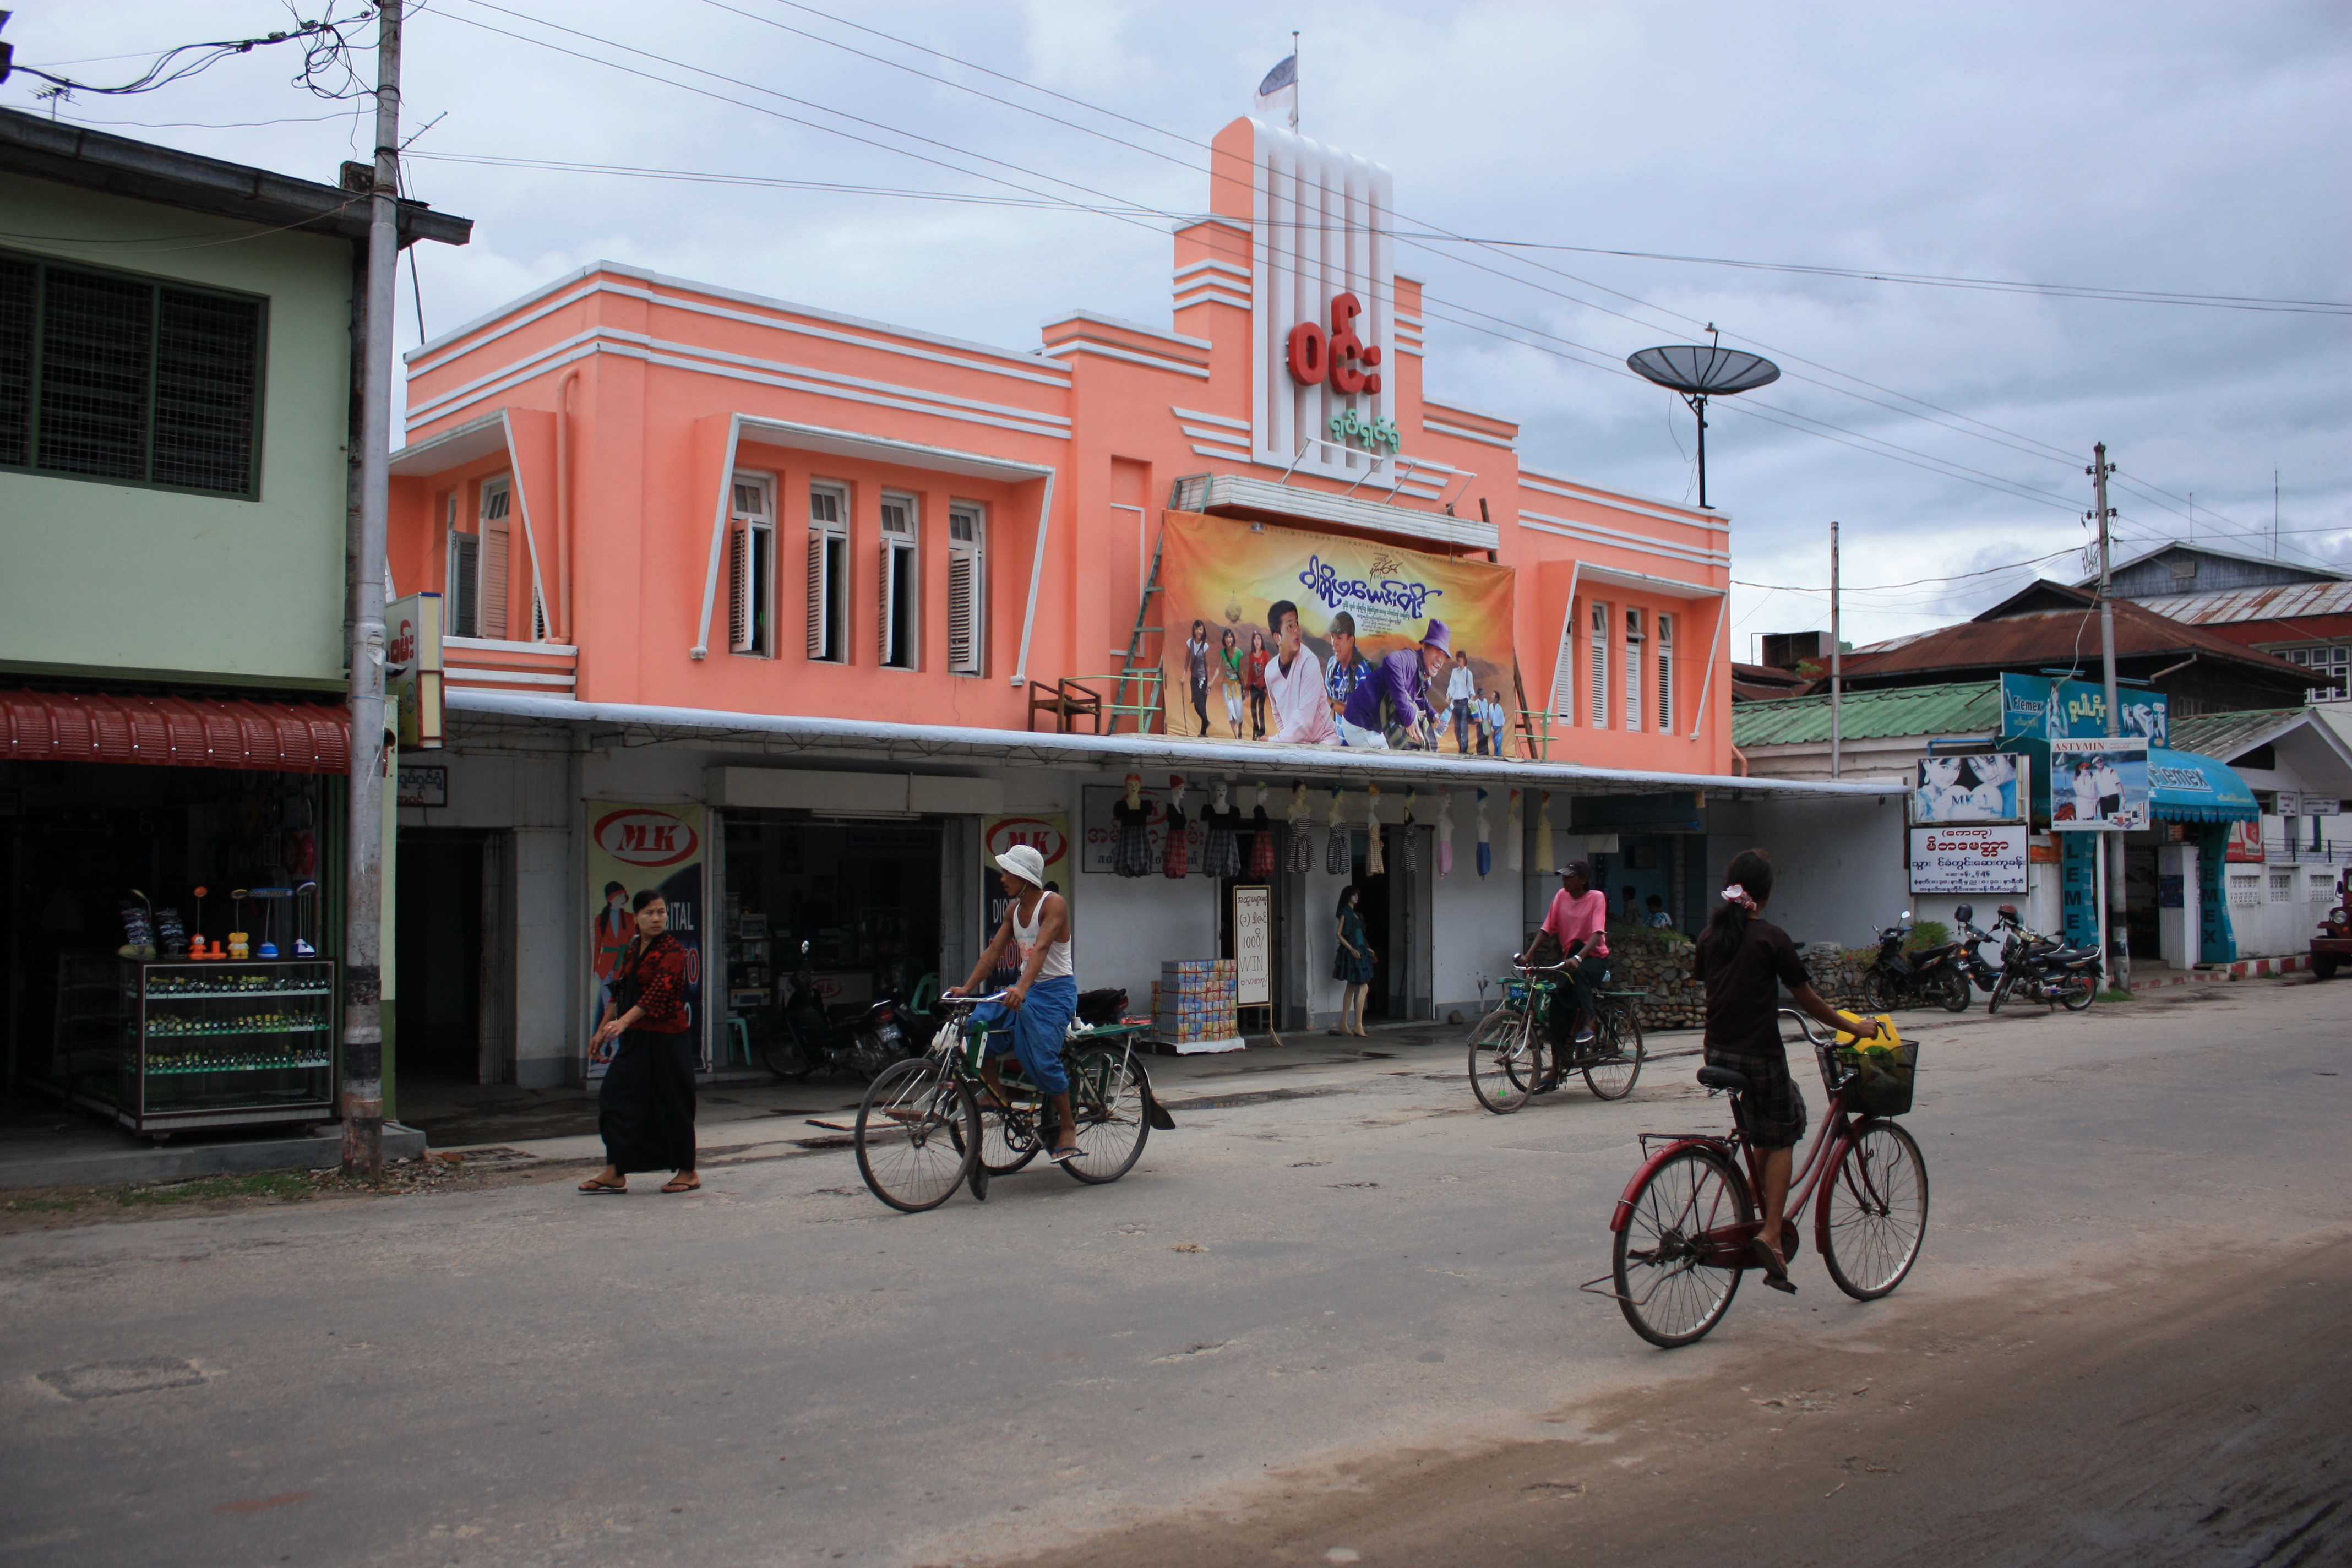 The Thwin Cinema in Rangoon. (PHOTO: Philip Jablon)